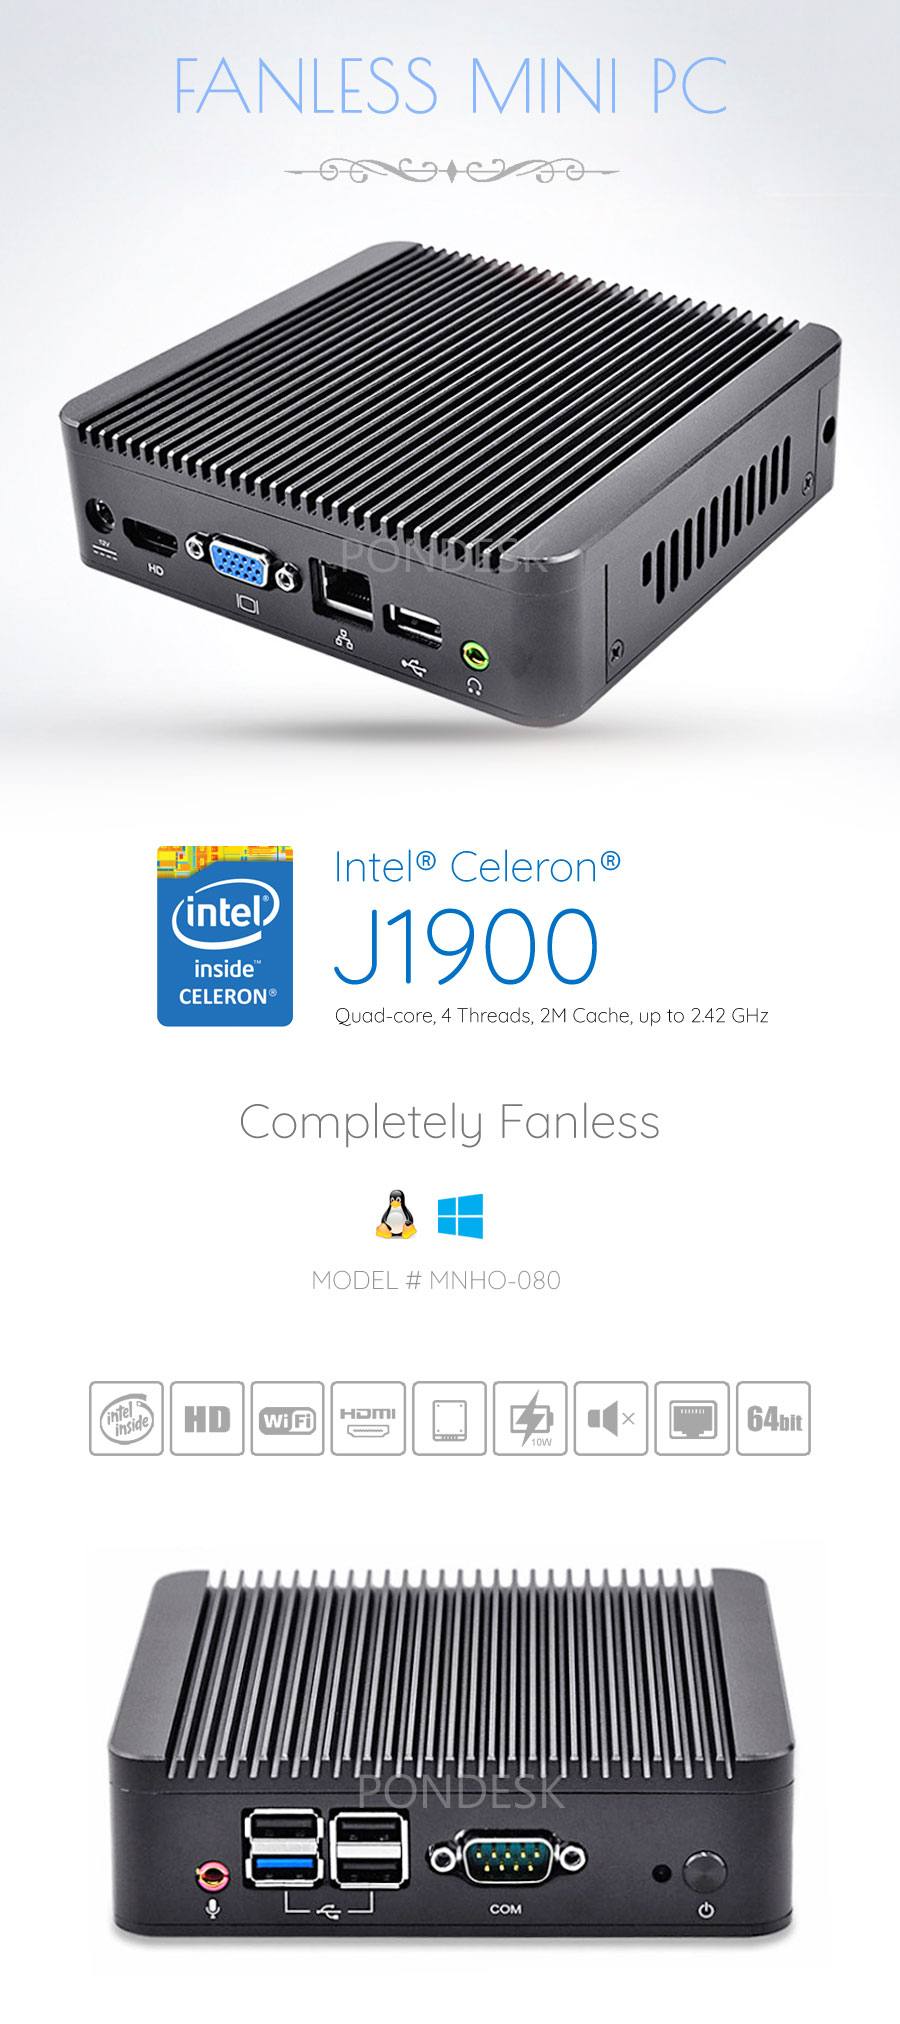 Intel® J1900 4 Core WiFi COM HD Dual Display Fanless Mini PC - MNHO-080 | Image